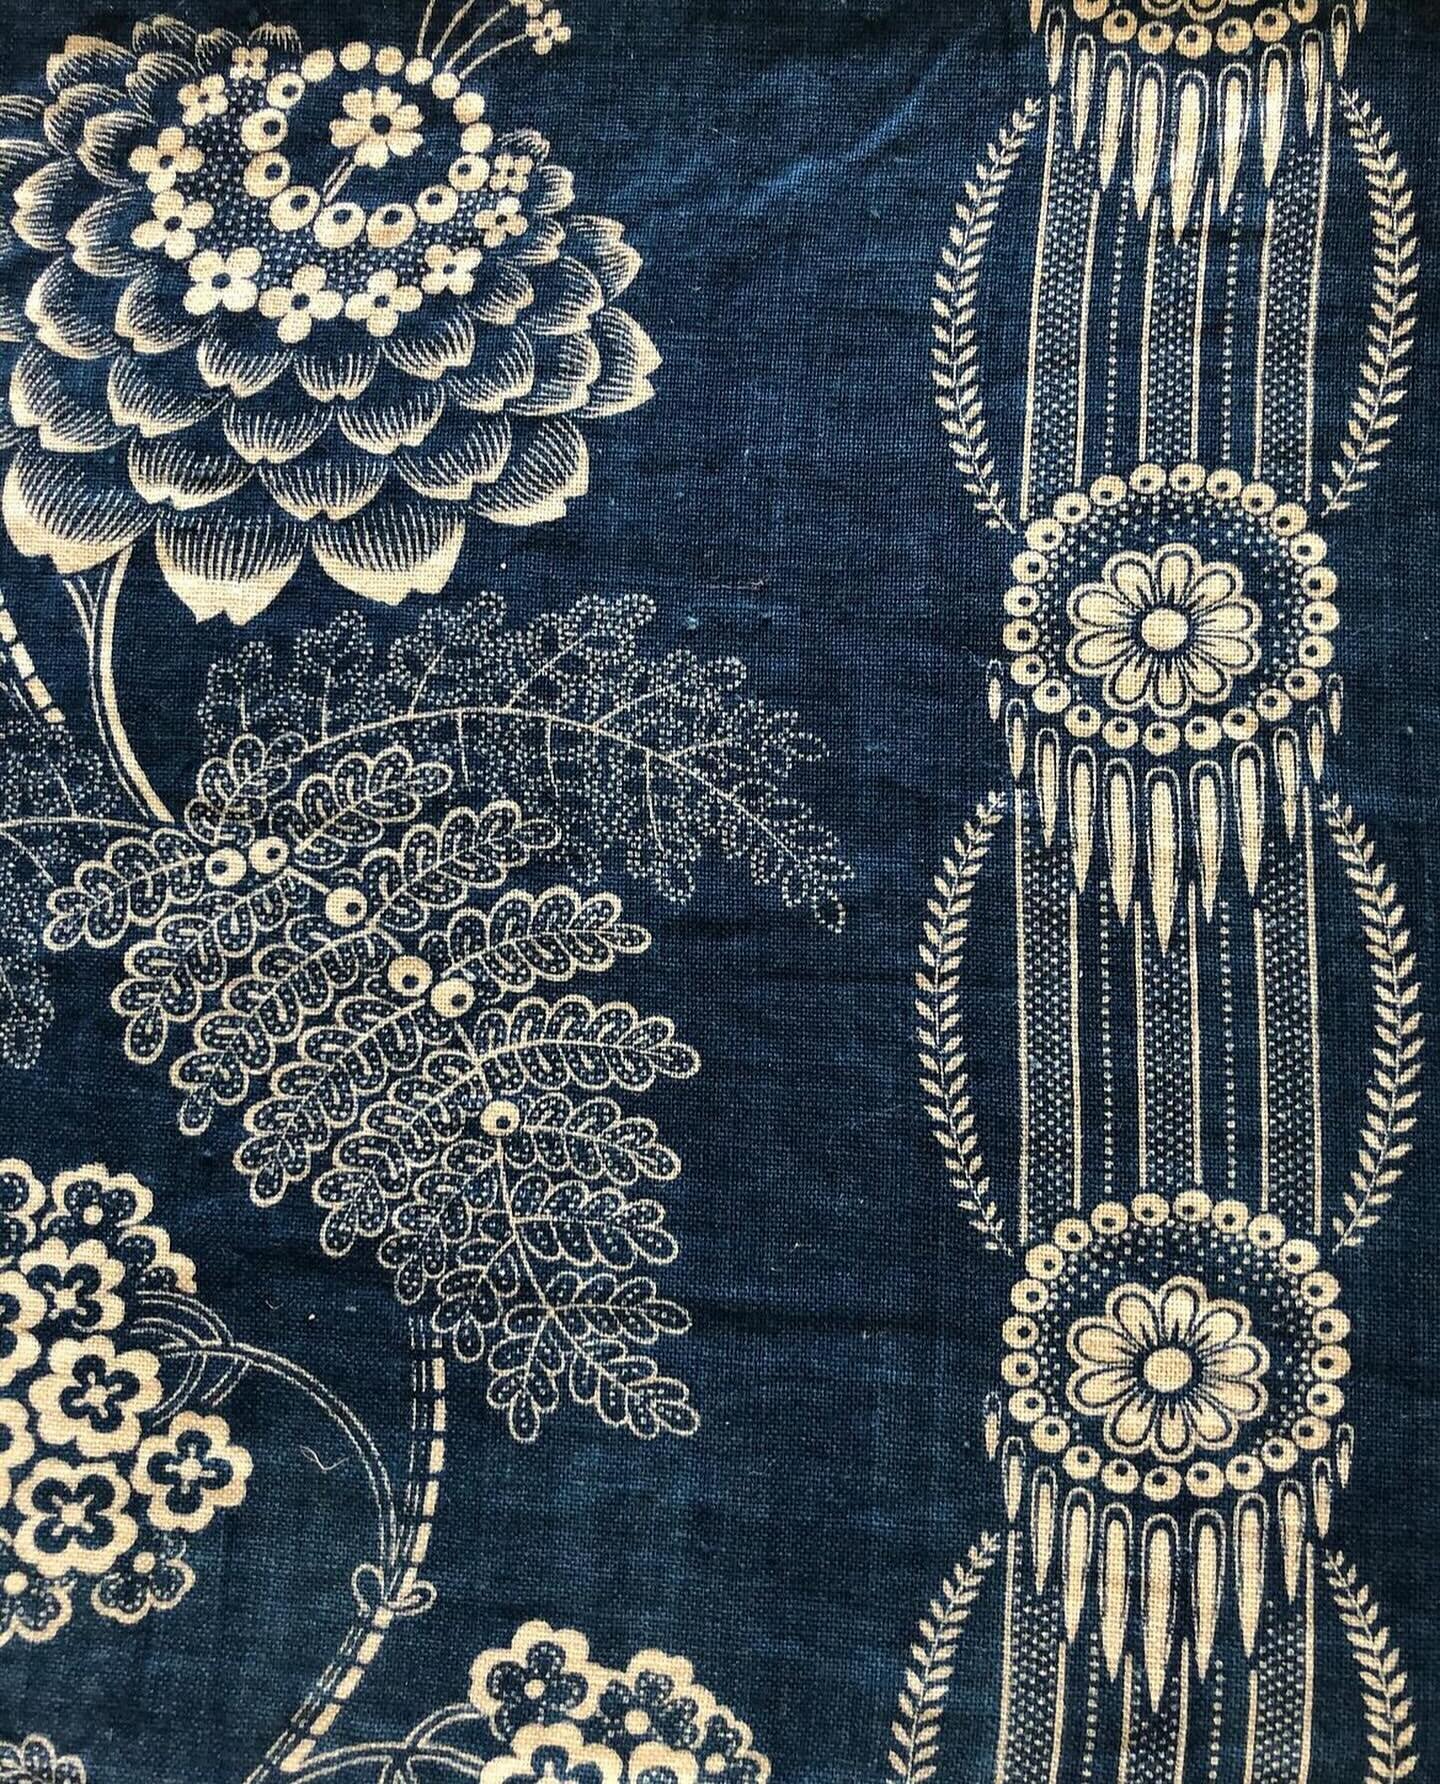 Japanese indigo textile design, 1830&rsquo;s.
RG @nicolefabredesigns 

#indigo #katazome #japanesetextile #textiledesign #indigotextile #printdesign #stencilprint #antiquetextiles #indigopattern #indigodesign #antiquetextile #floralpattern